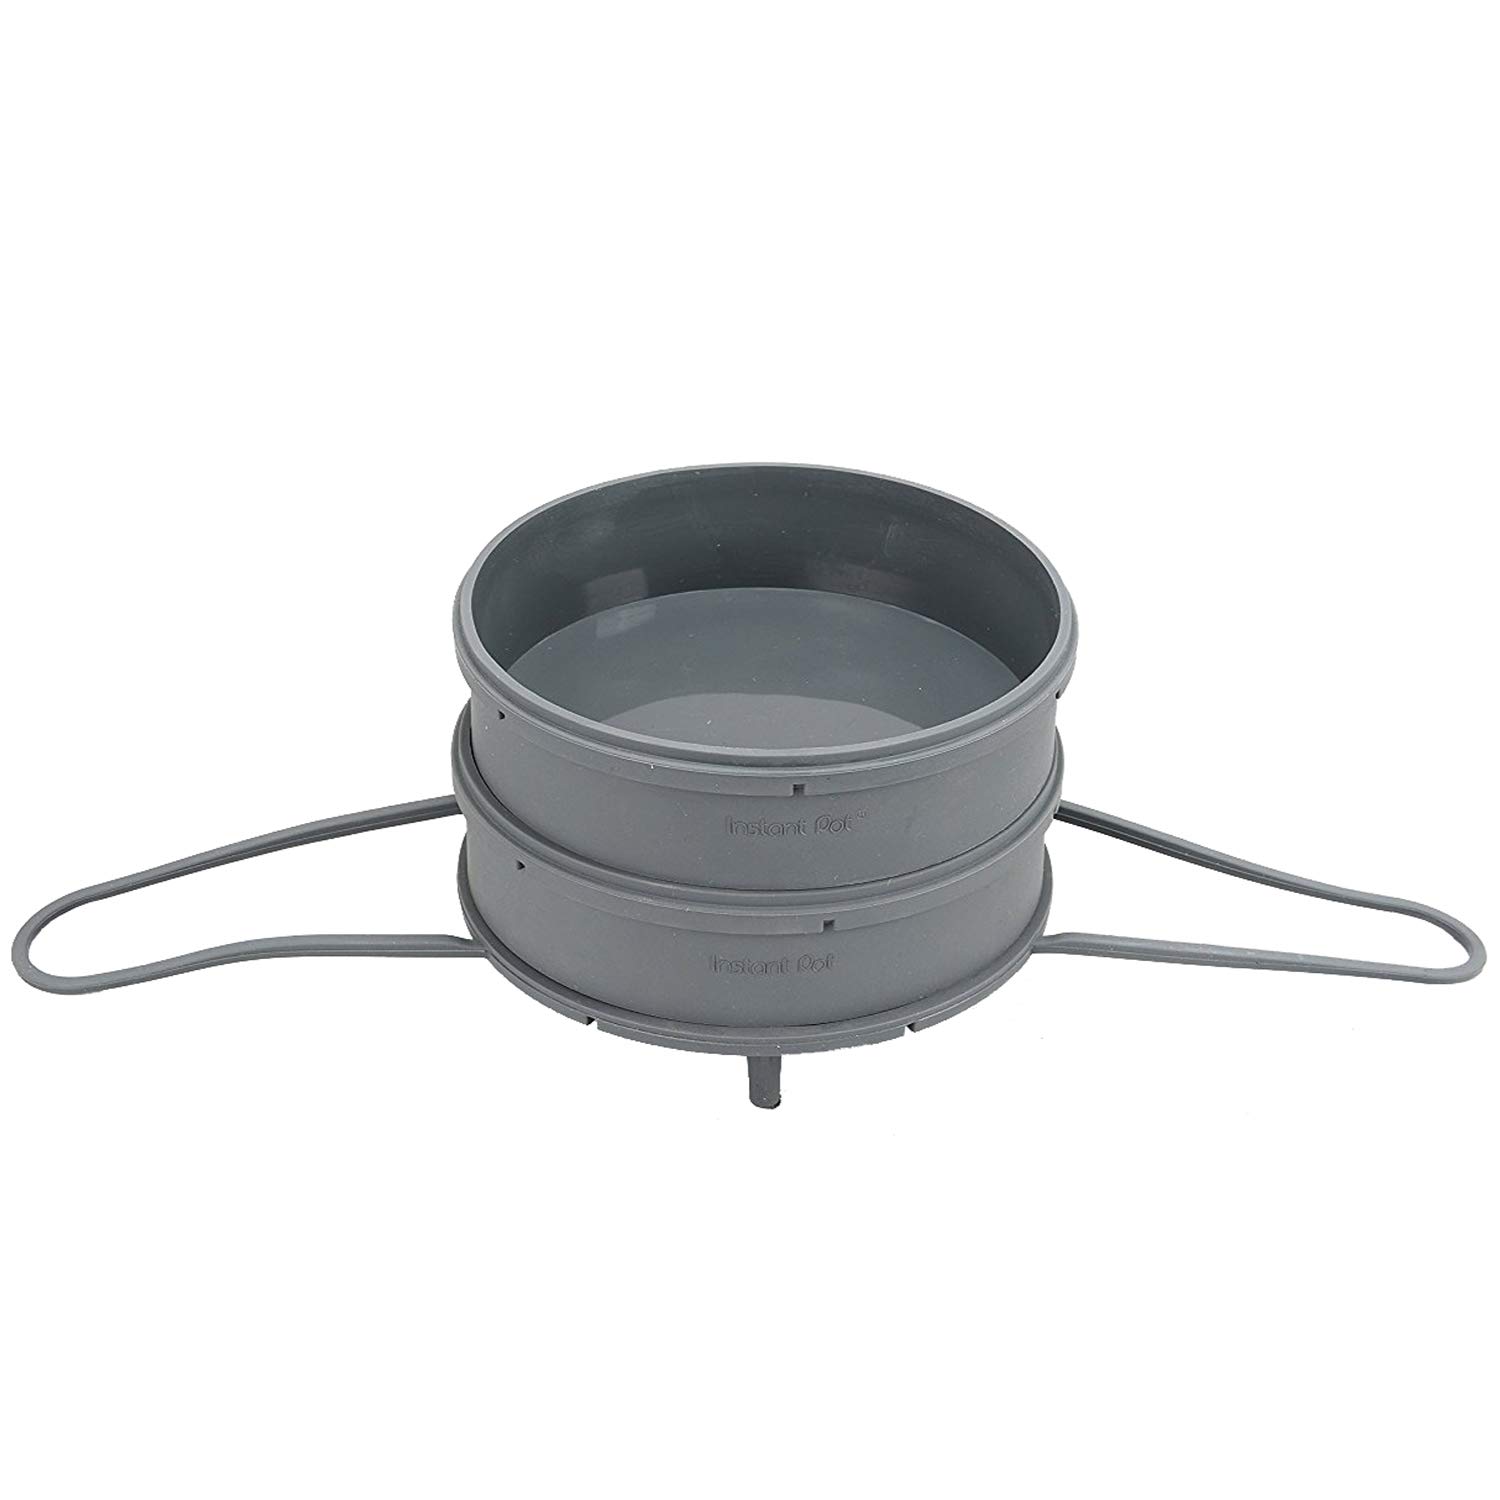 Instant Pot Electric Pressure Cooker Accessory Official Steamer Insert Set, Includes Long Handled Trivet, Steamer Basket, Broiler Pan to fit all 8qt and 6qt models